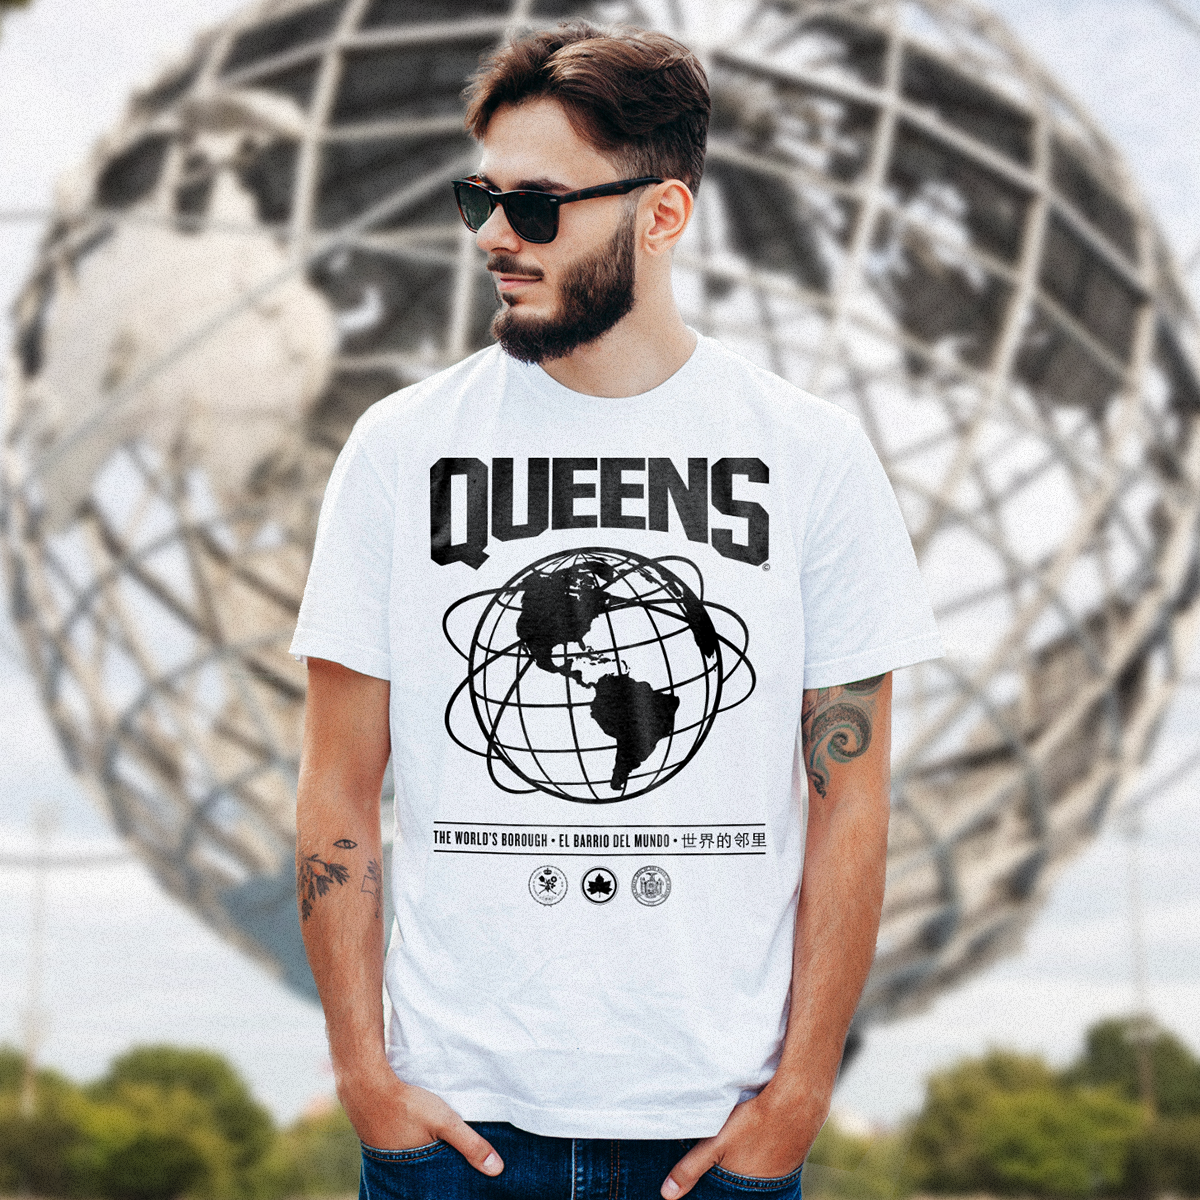 Queens Unisphere - Unisex T-Shirt - GustoNYC